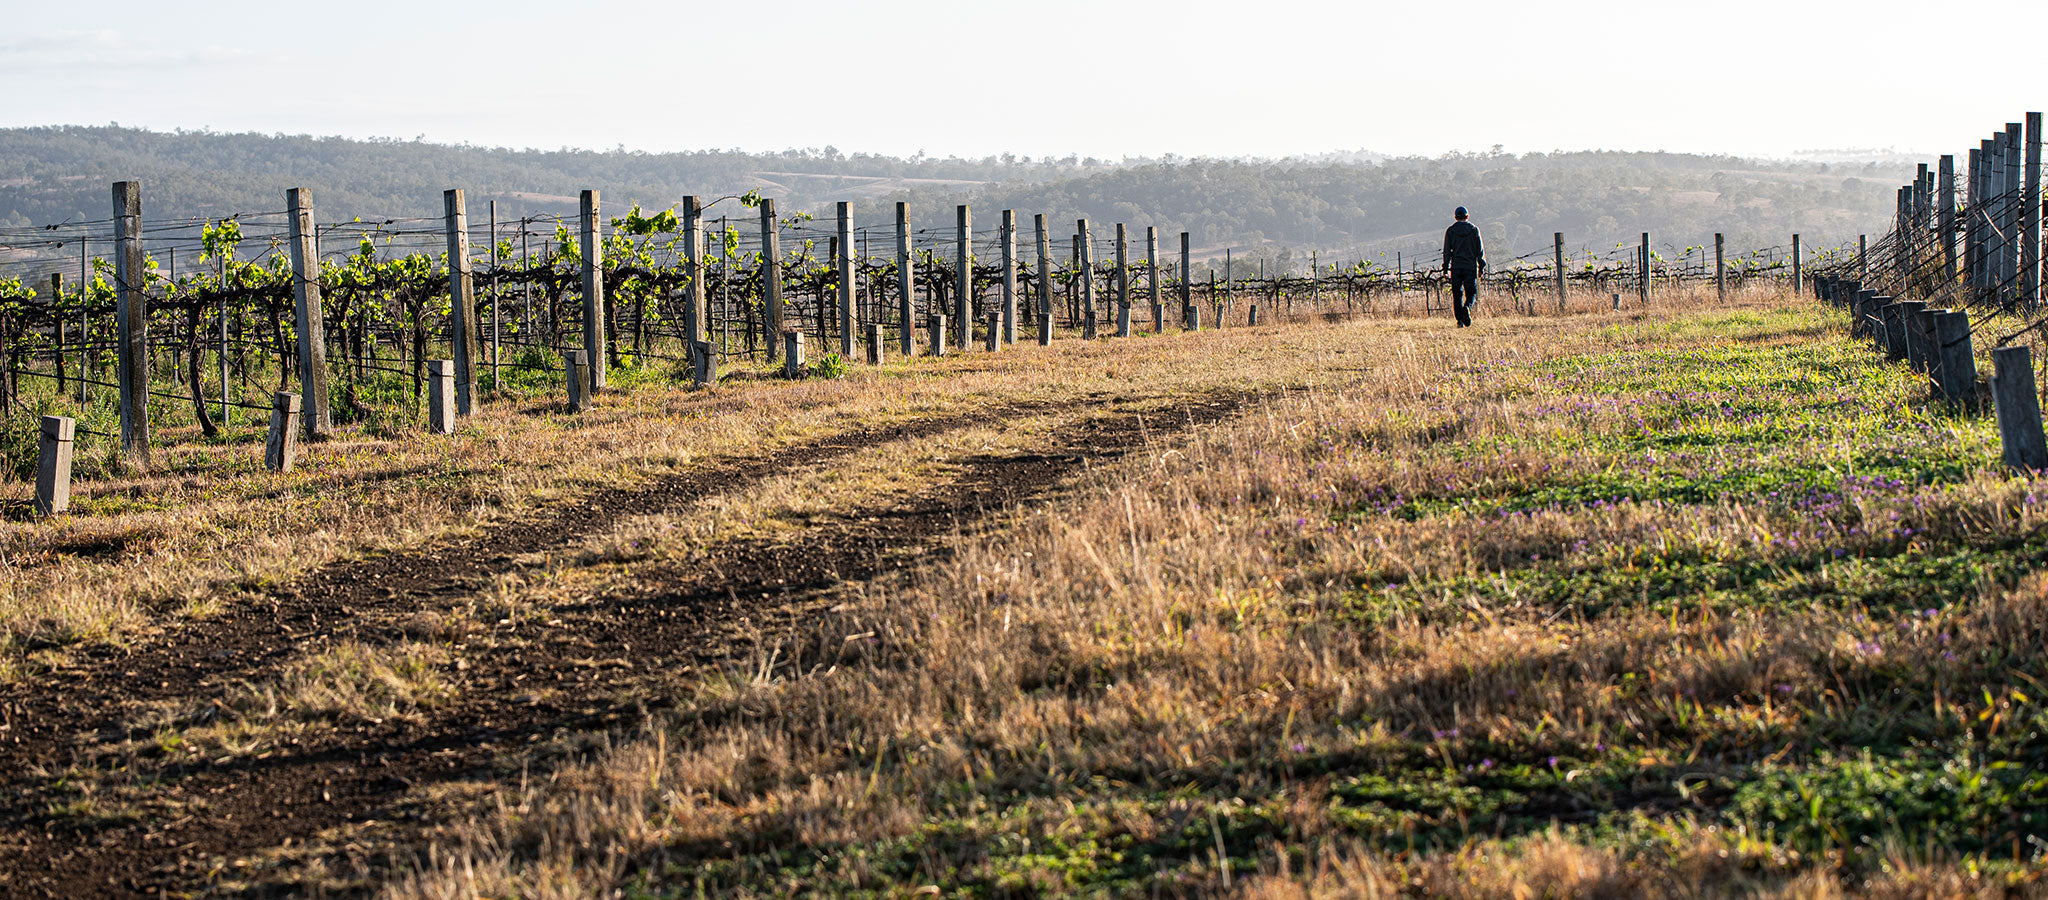 Strolling the vineyard